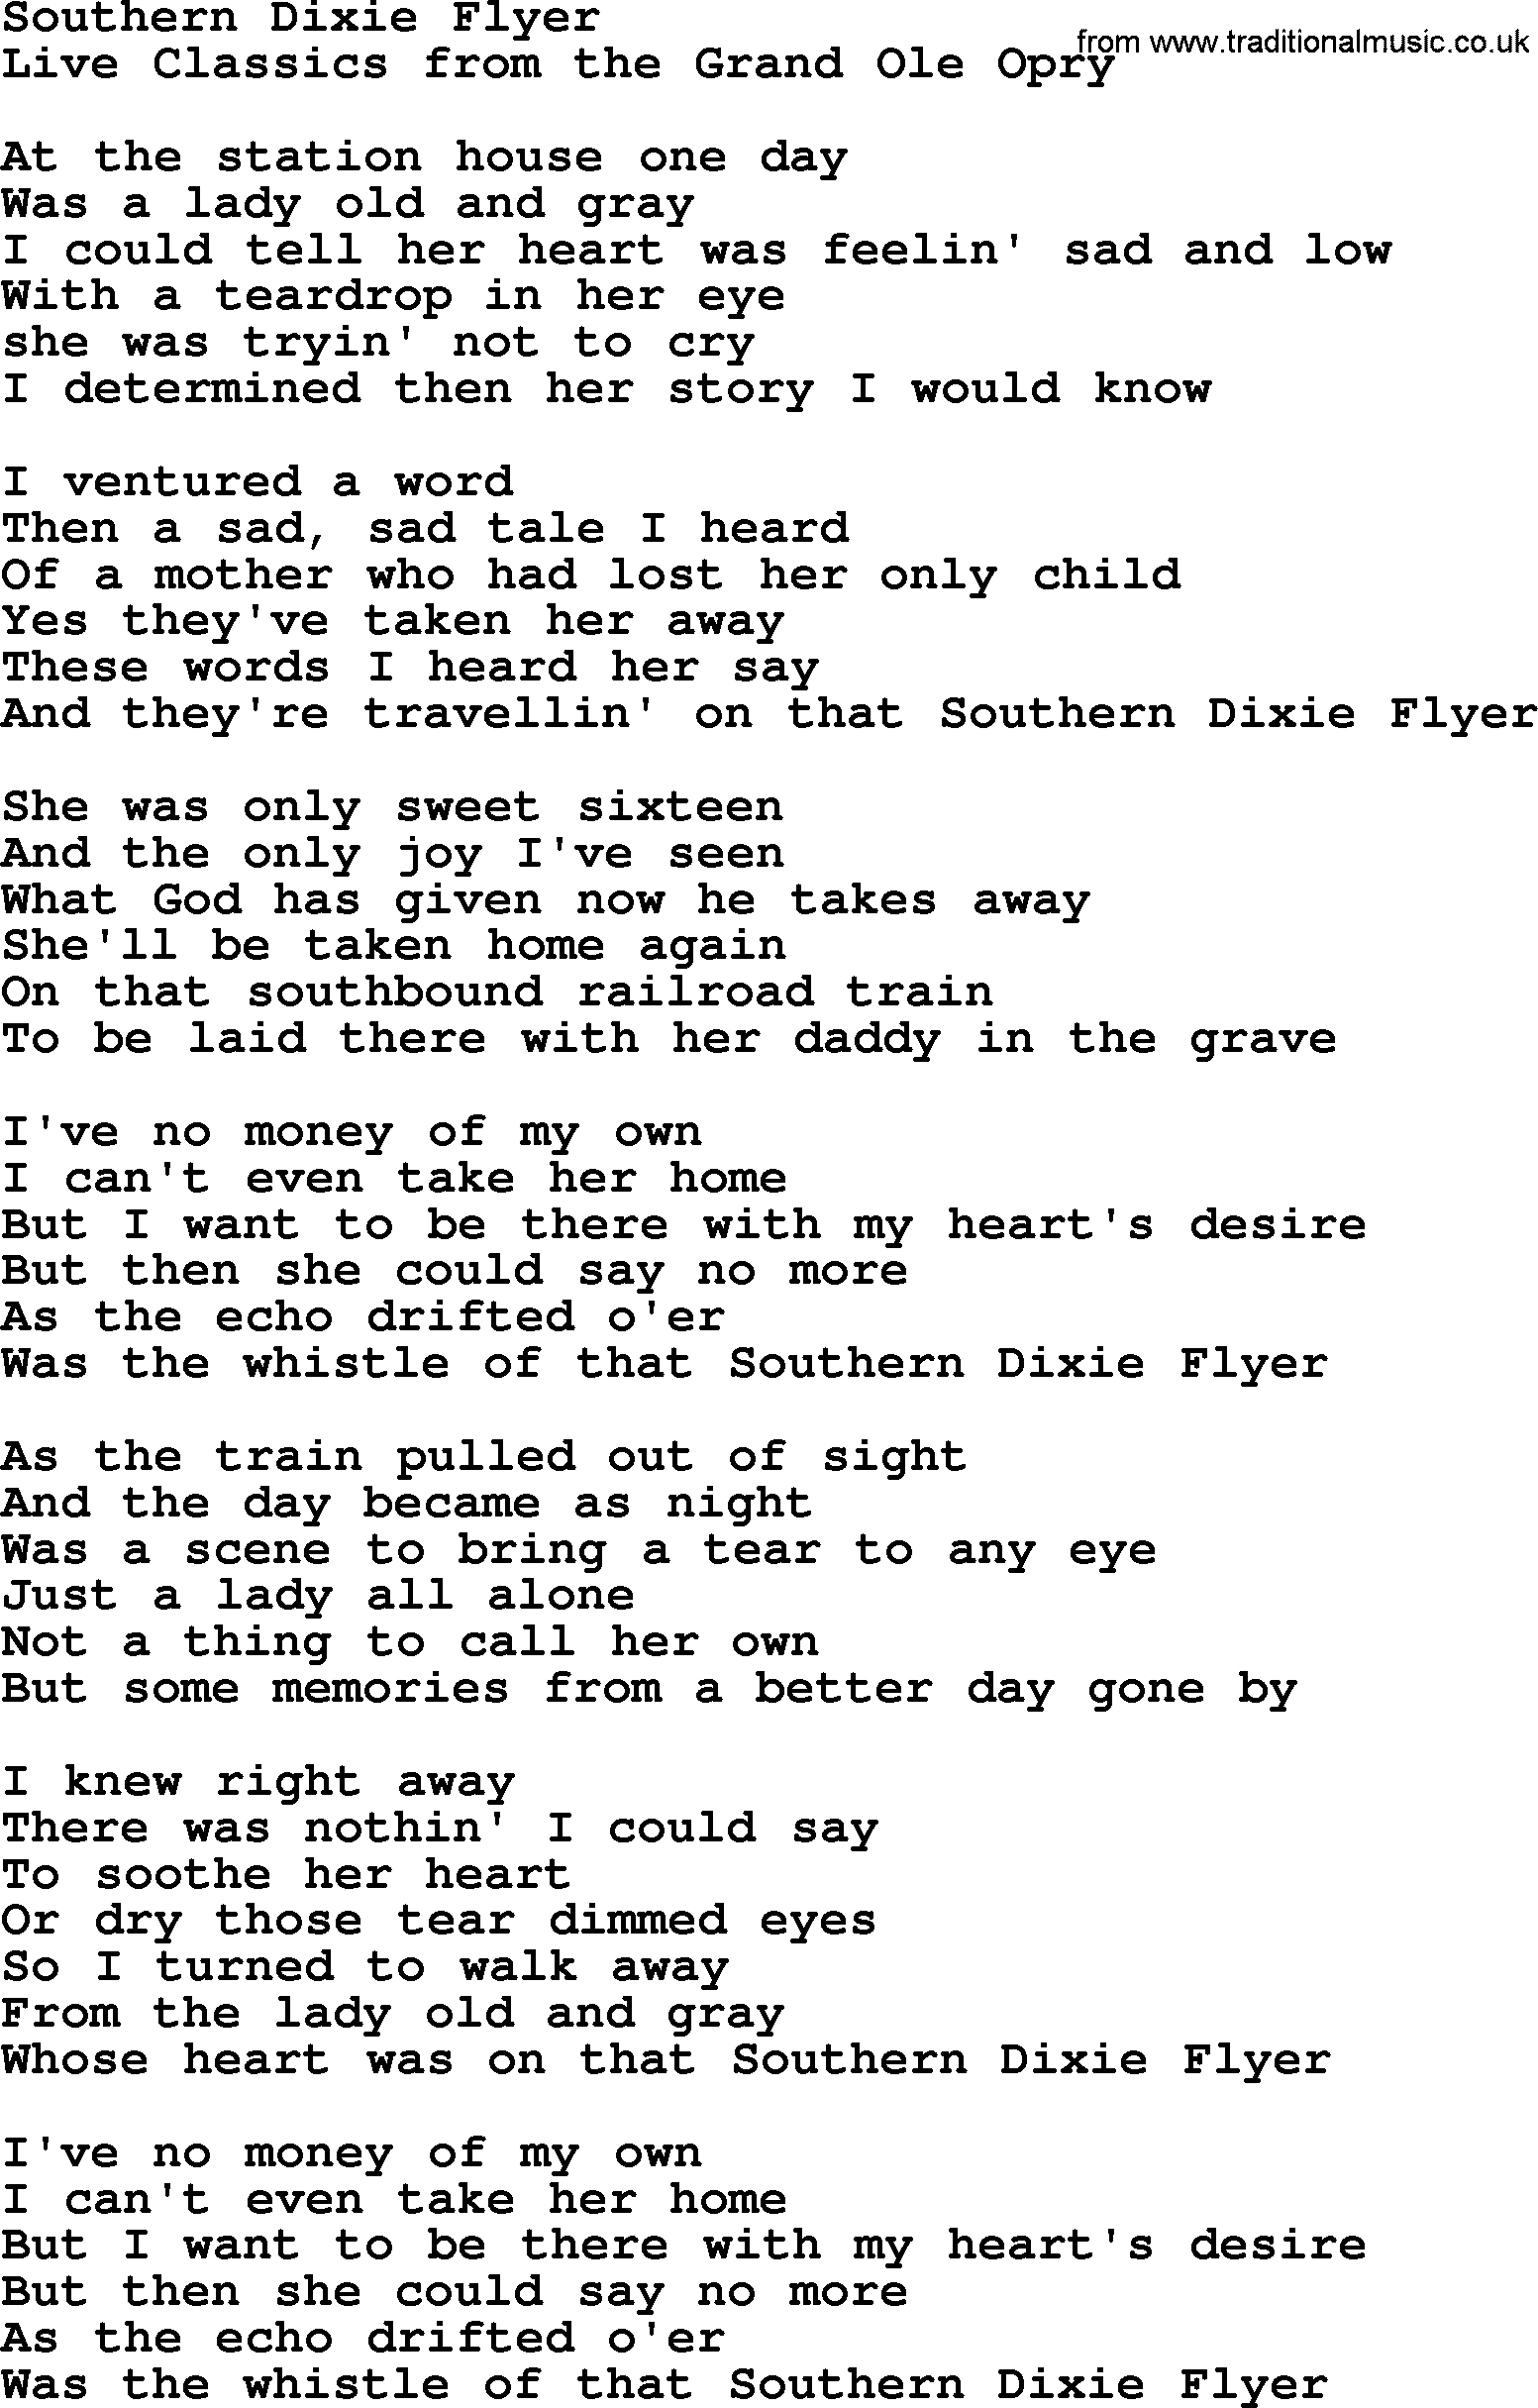 Marty Robbins song: Southern Dixie Flyer, lyrics